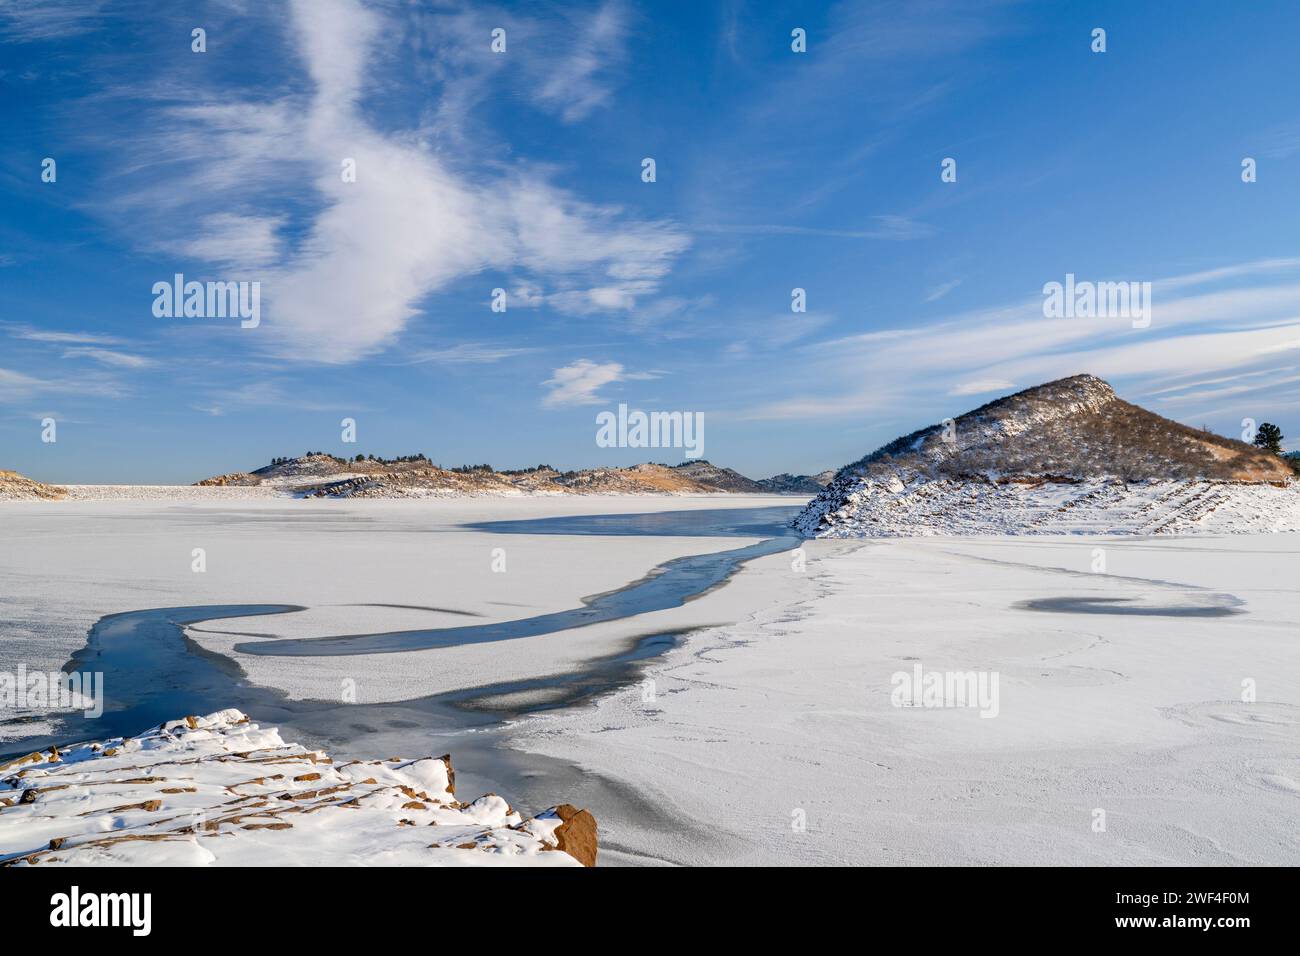 winter scenery of northern Colorado foothills - frozen Horsetooth Reservoir Stock Photo